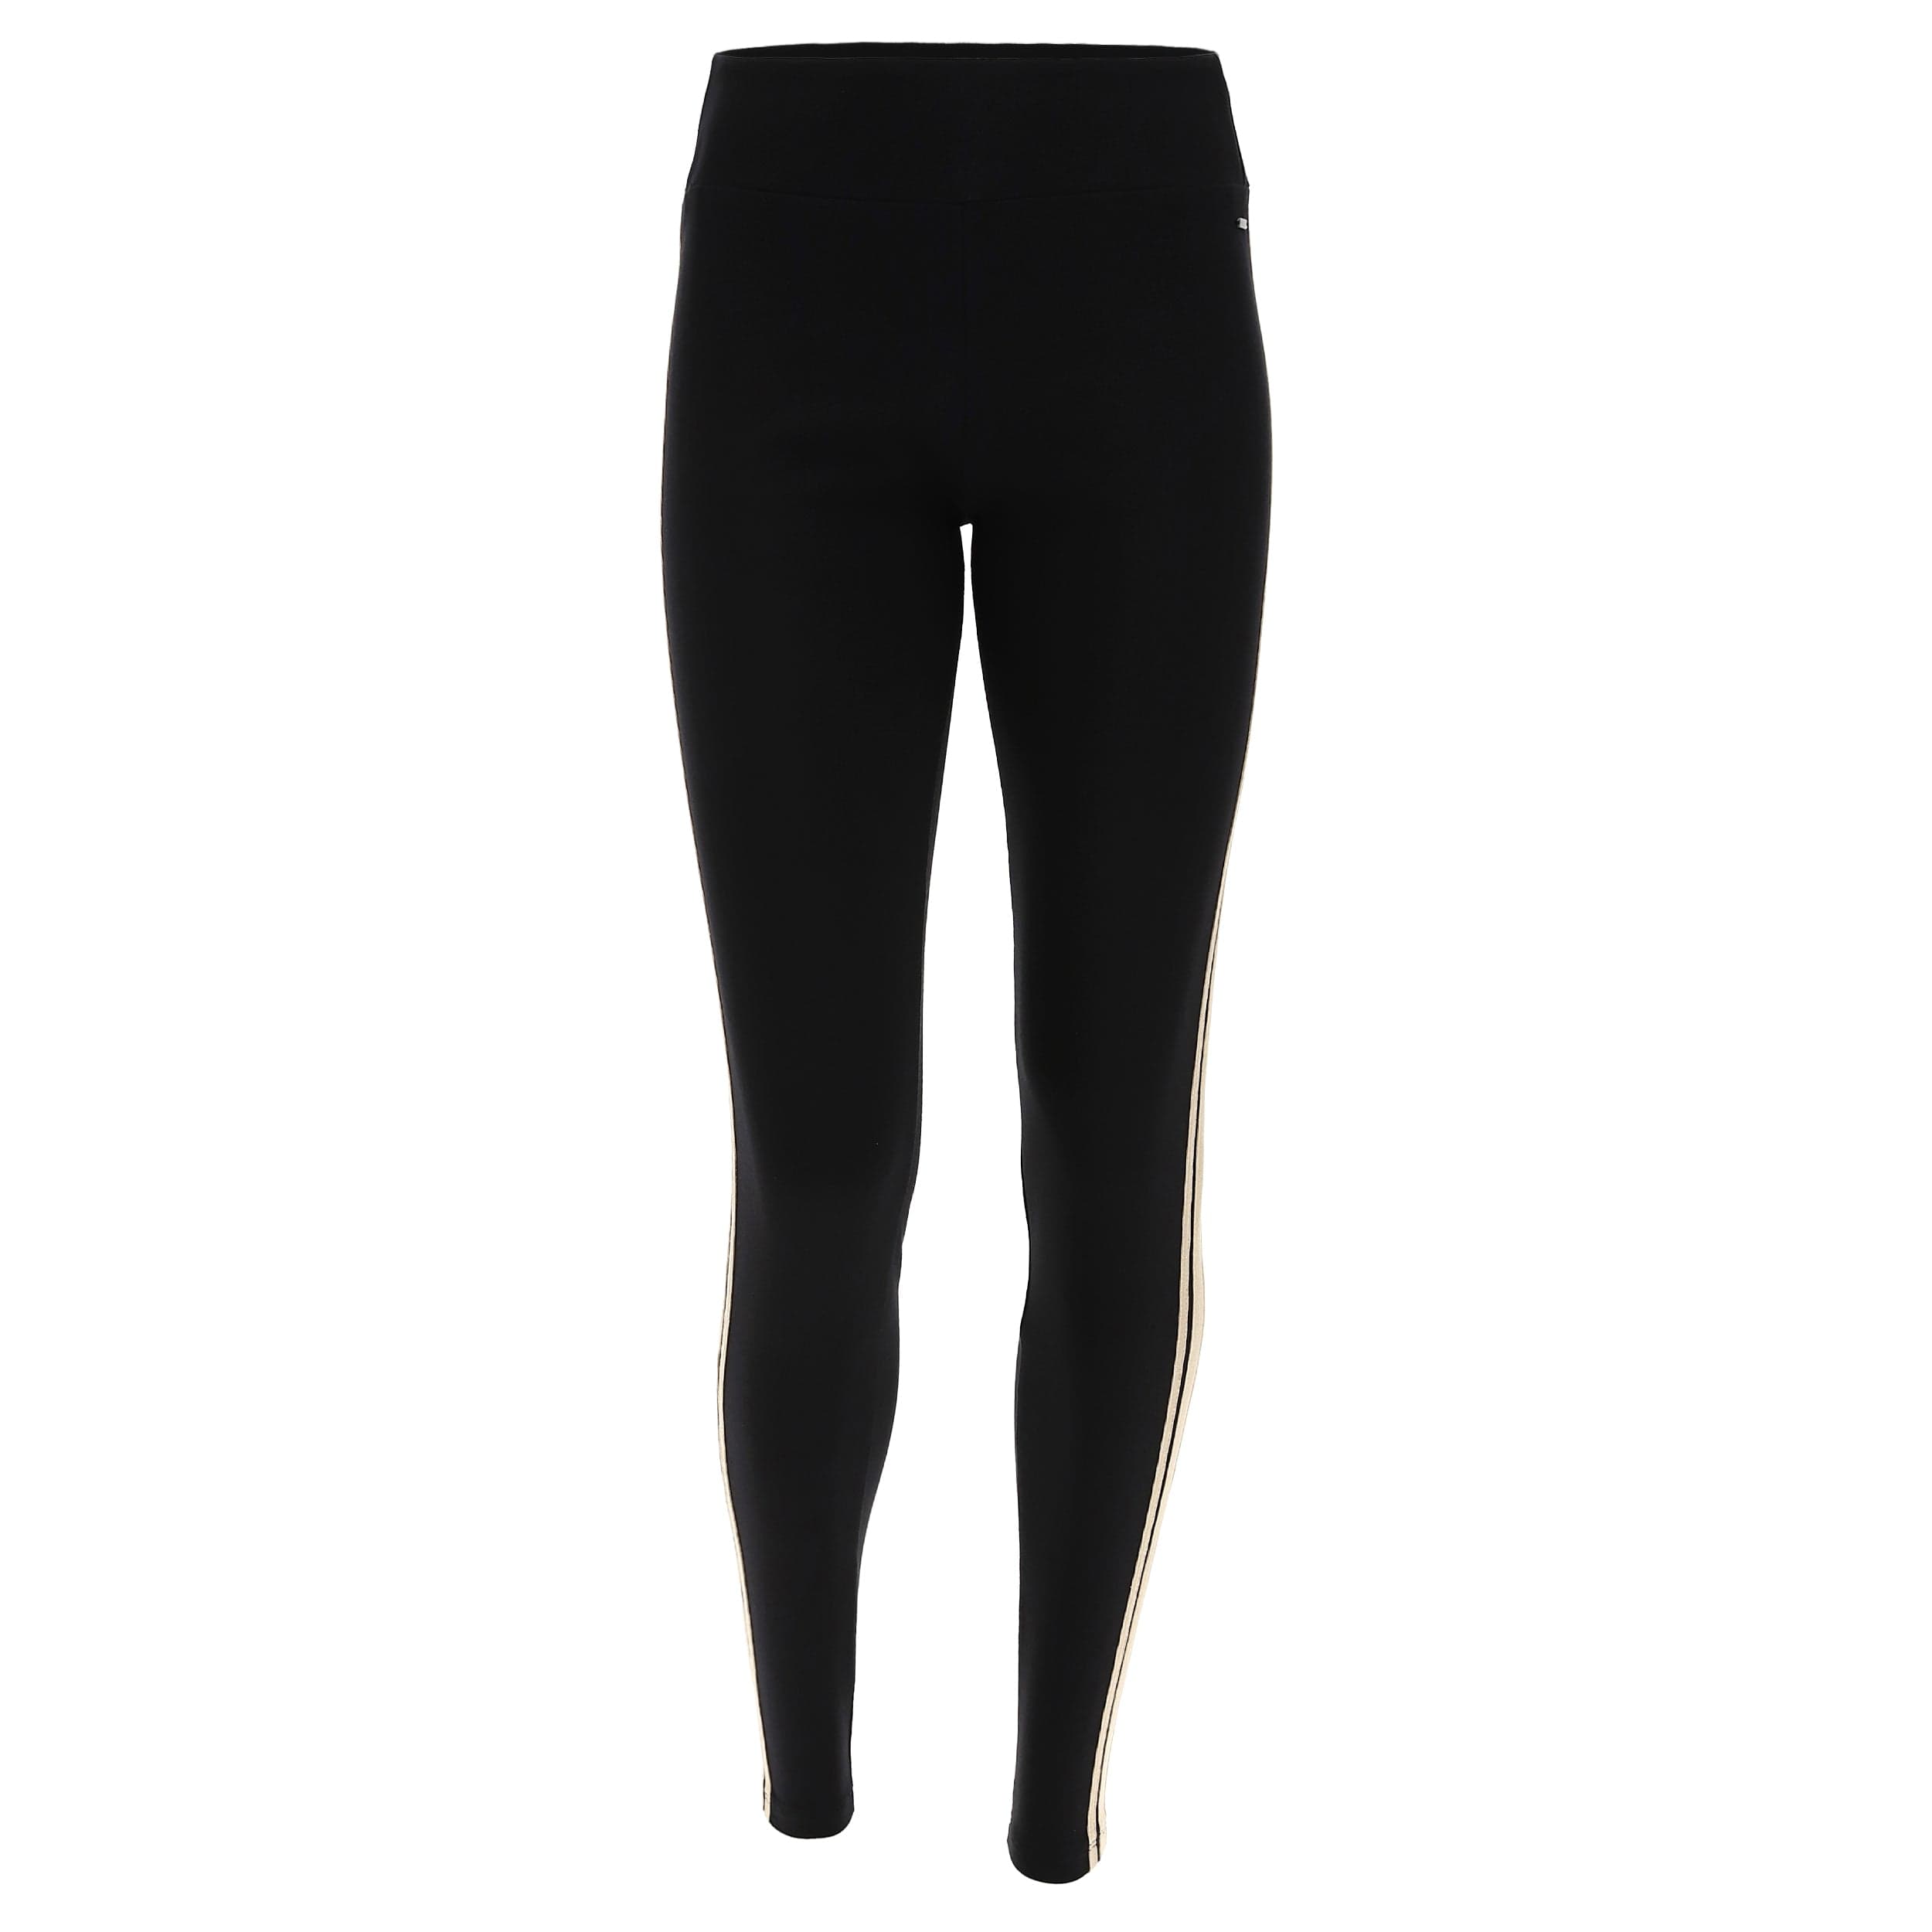 Lurex Activewear Leggings - Mid Rise - Full Length - Black + Gold Stripe 2